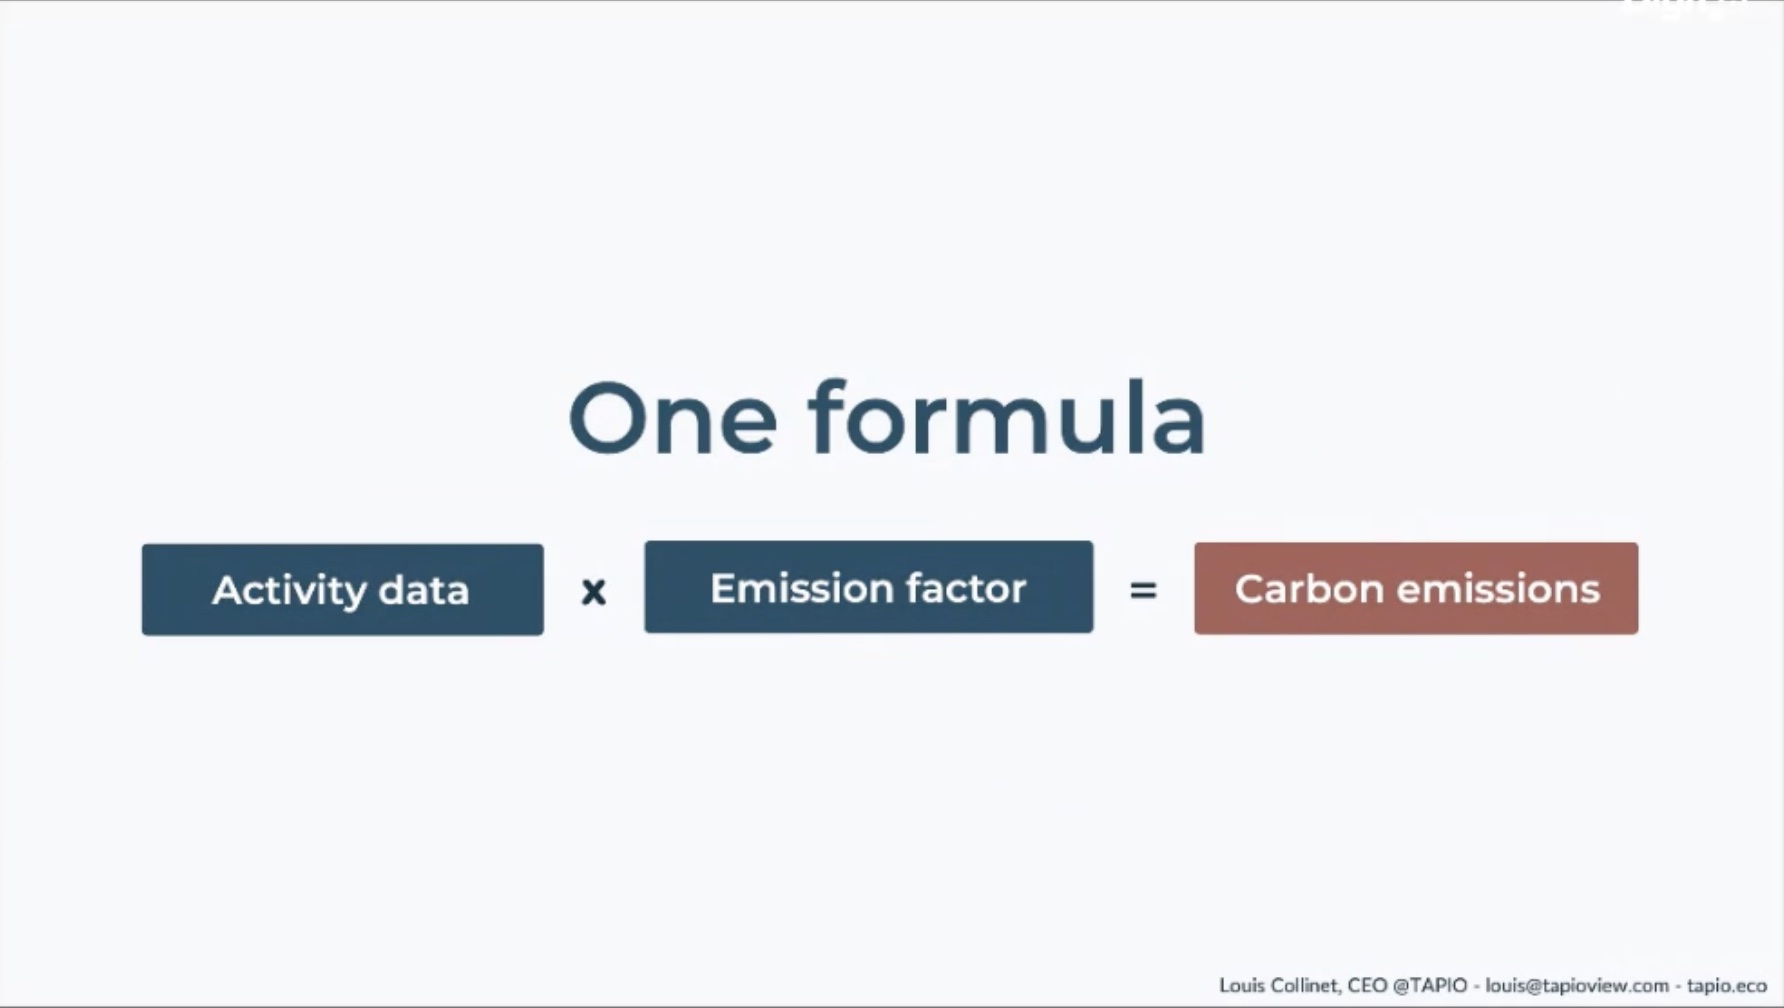 diagram saying " One formula I Activity data x Emission factor = carbon emissions"